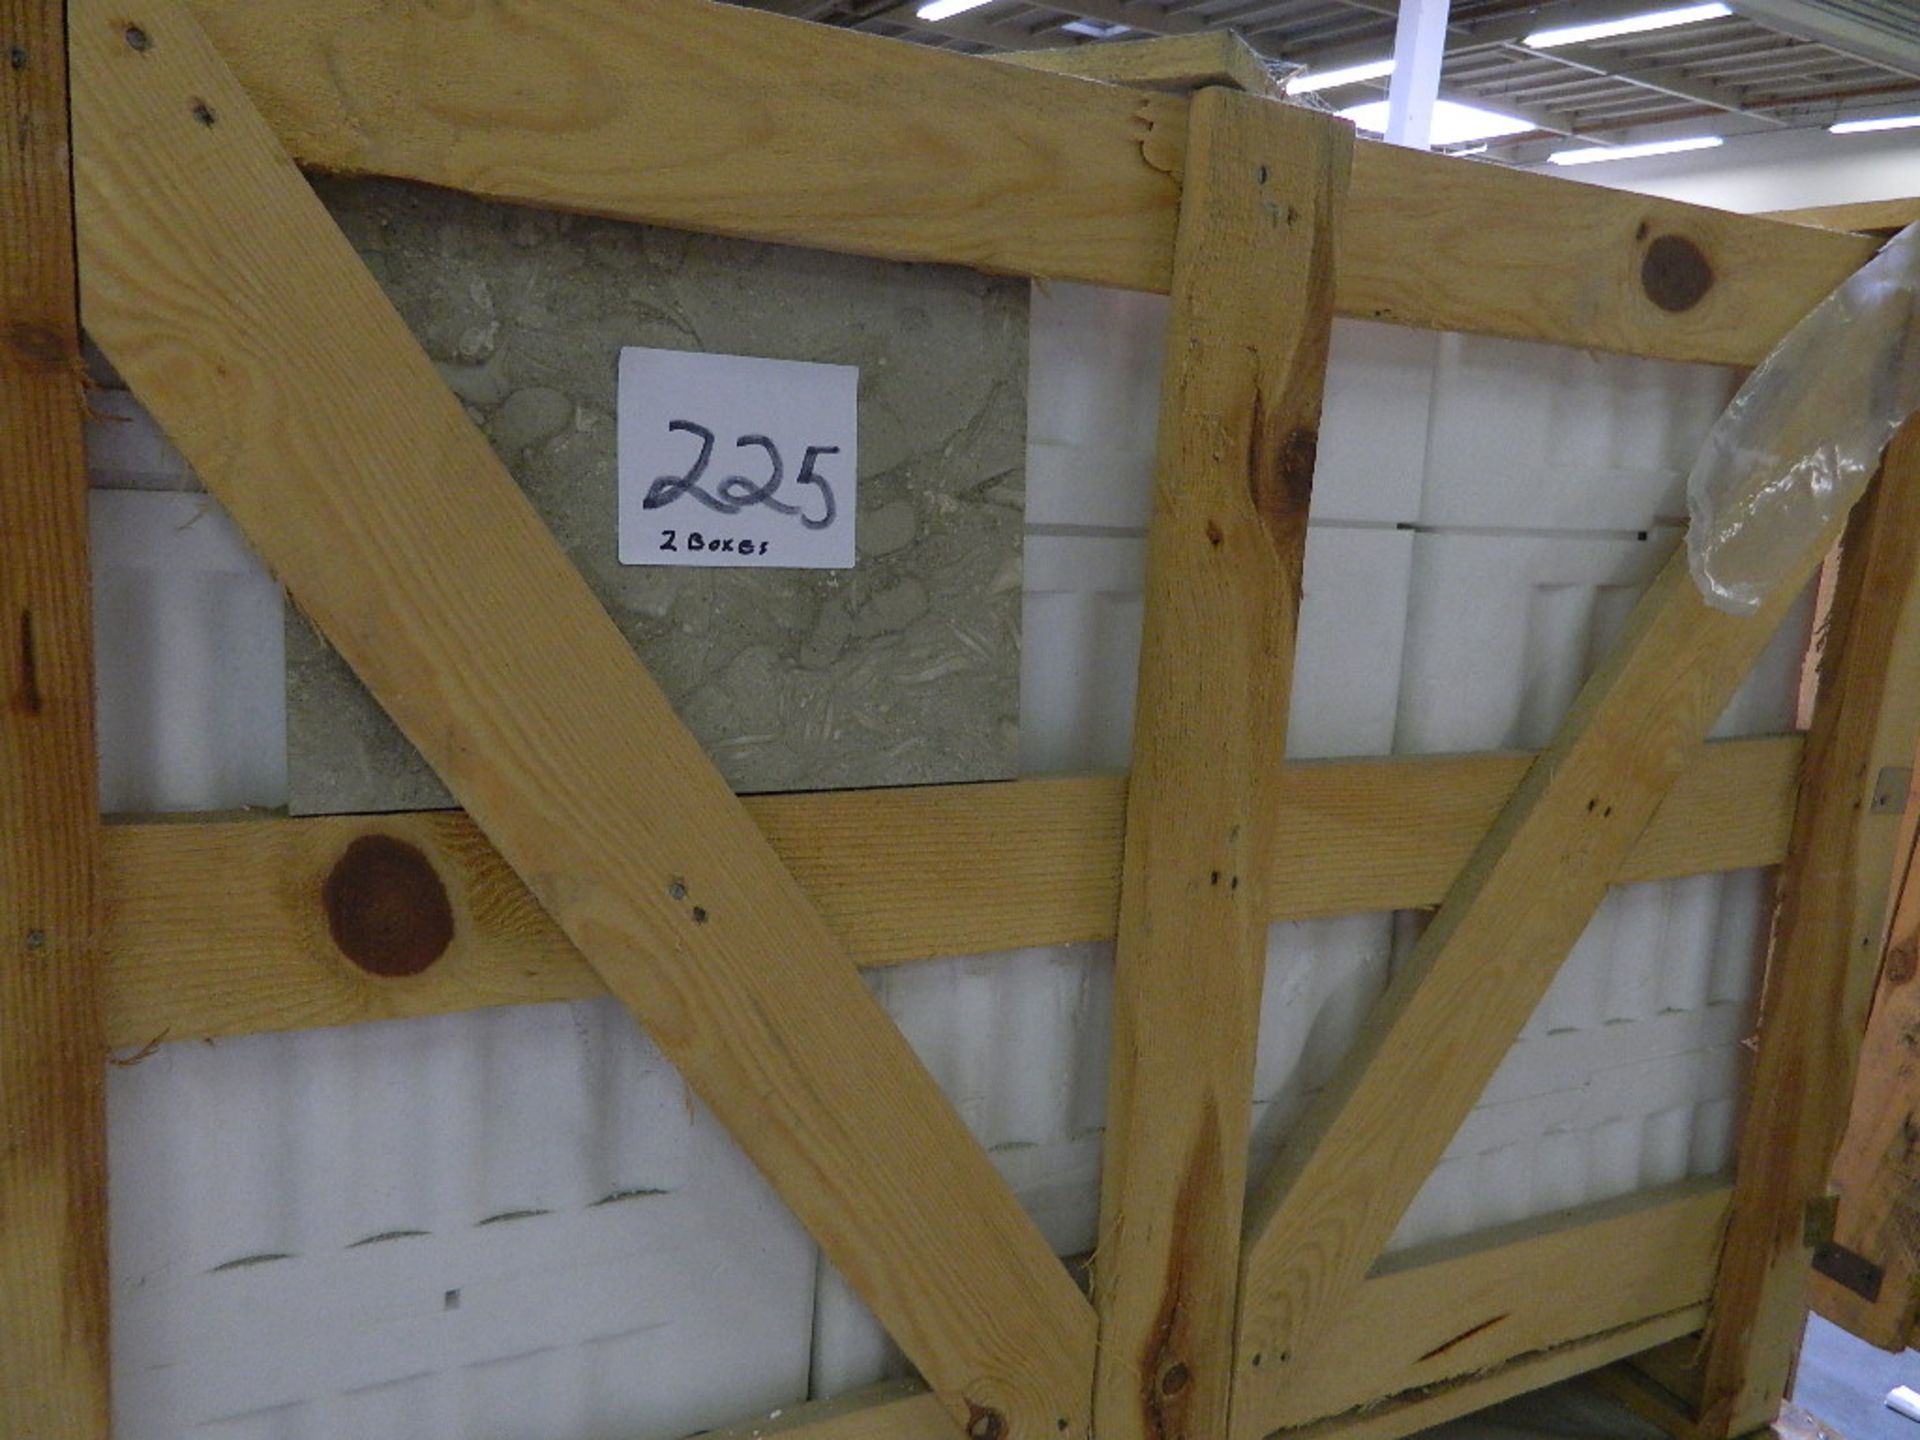 2 crates seagrass 12x12